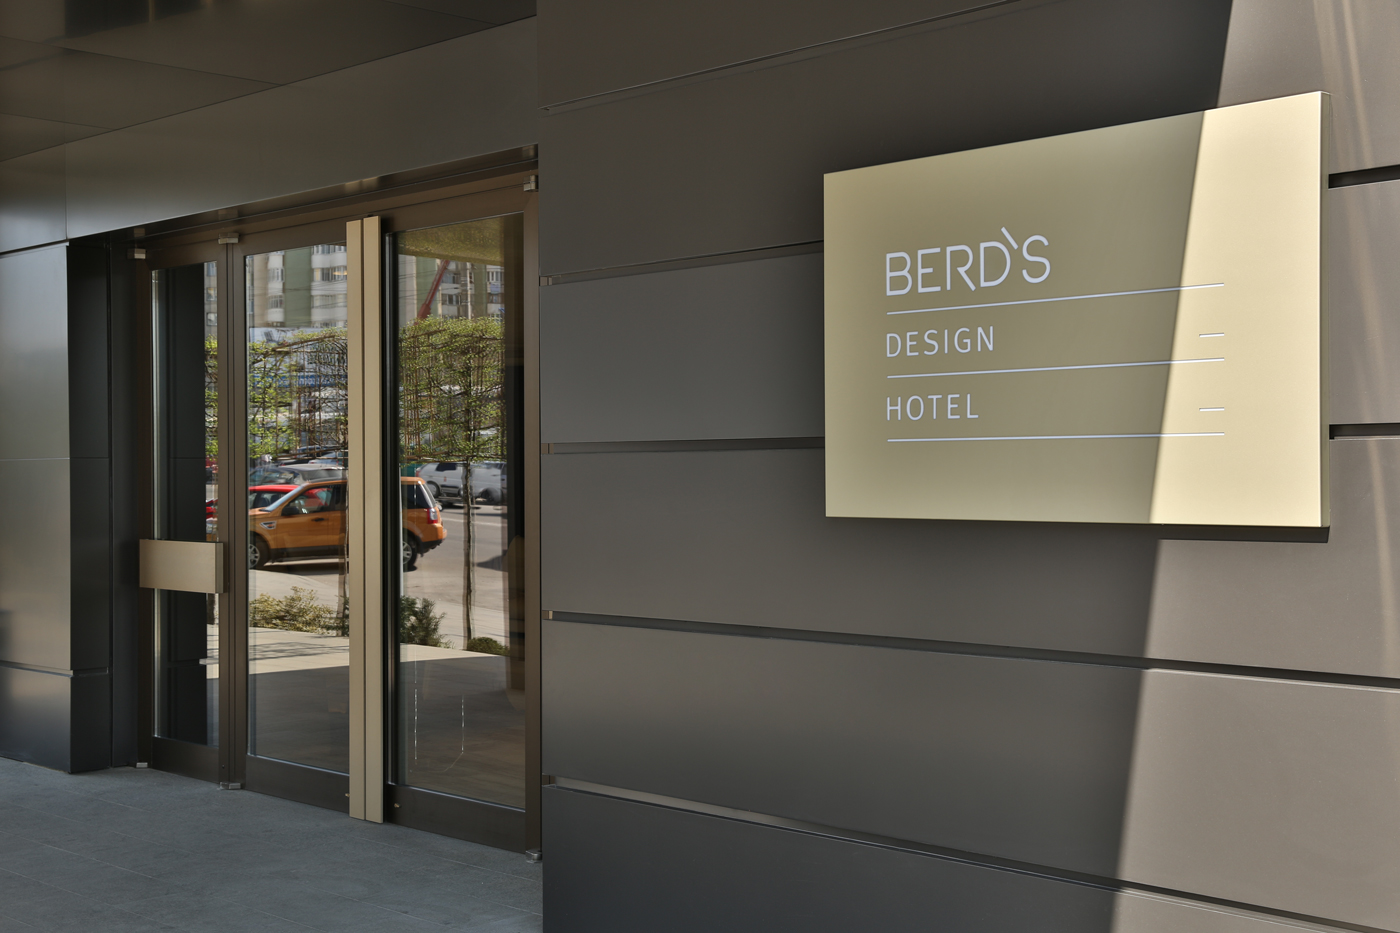 BERD'S Design Hotel Молдова Brand Design chisinau vadim paschenko Фірмовий стиль Logo Designs дизайн дизайн вадим пащенко